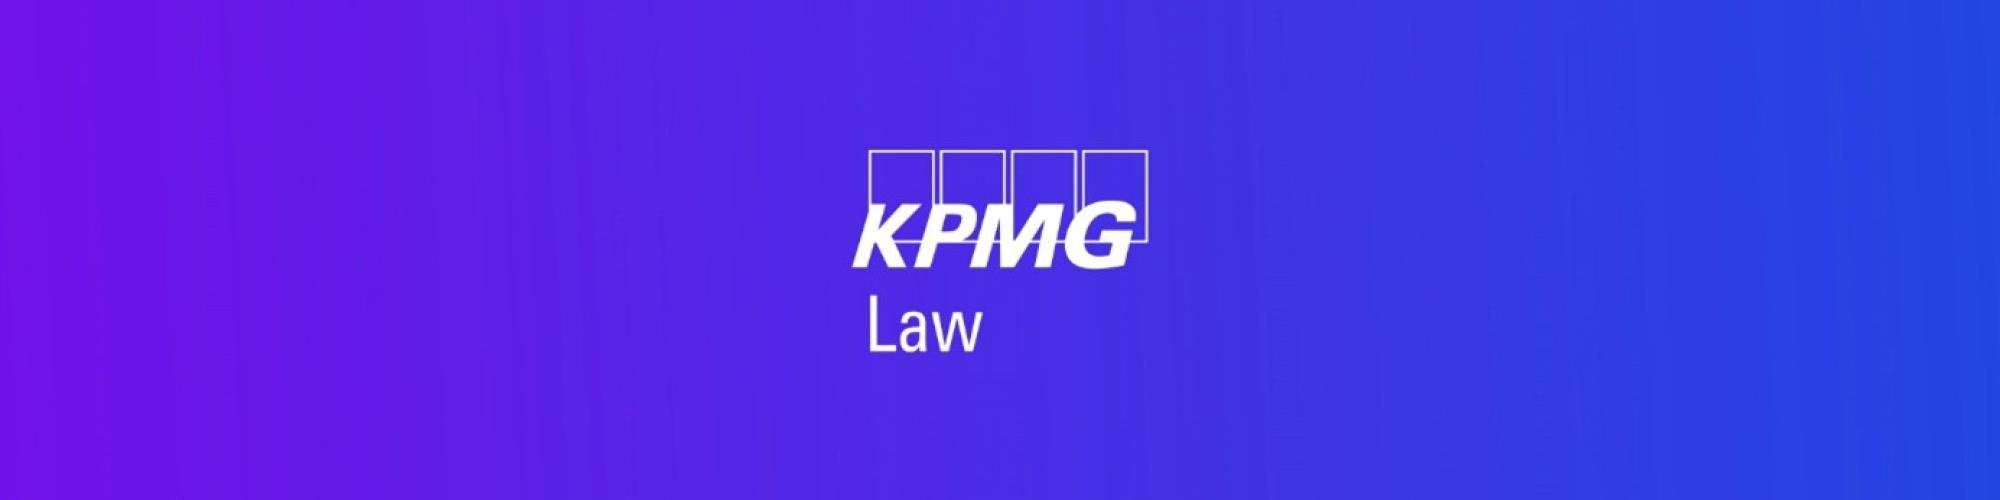 KPMG Law Rechtsanwaltsgesellschaft mbH